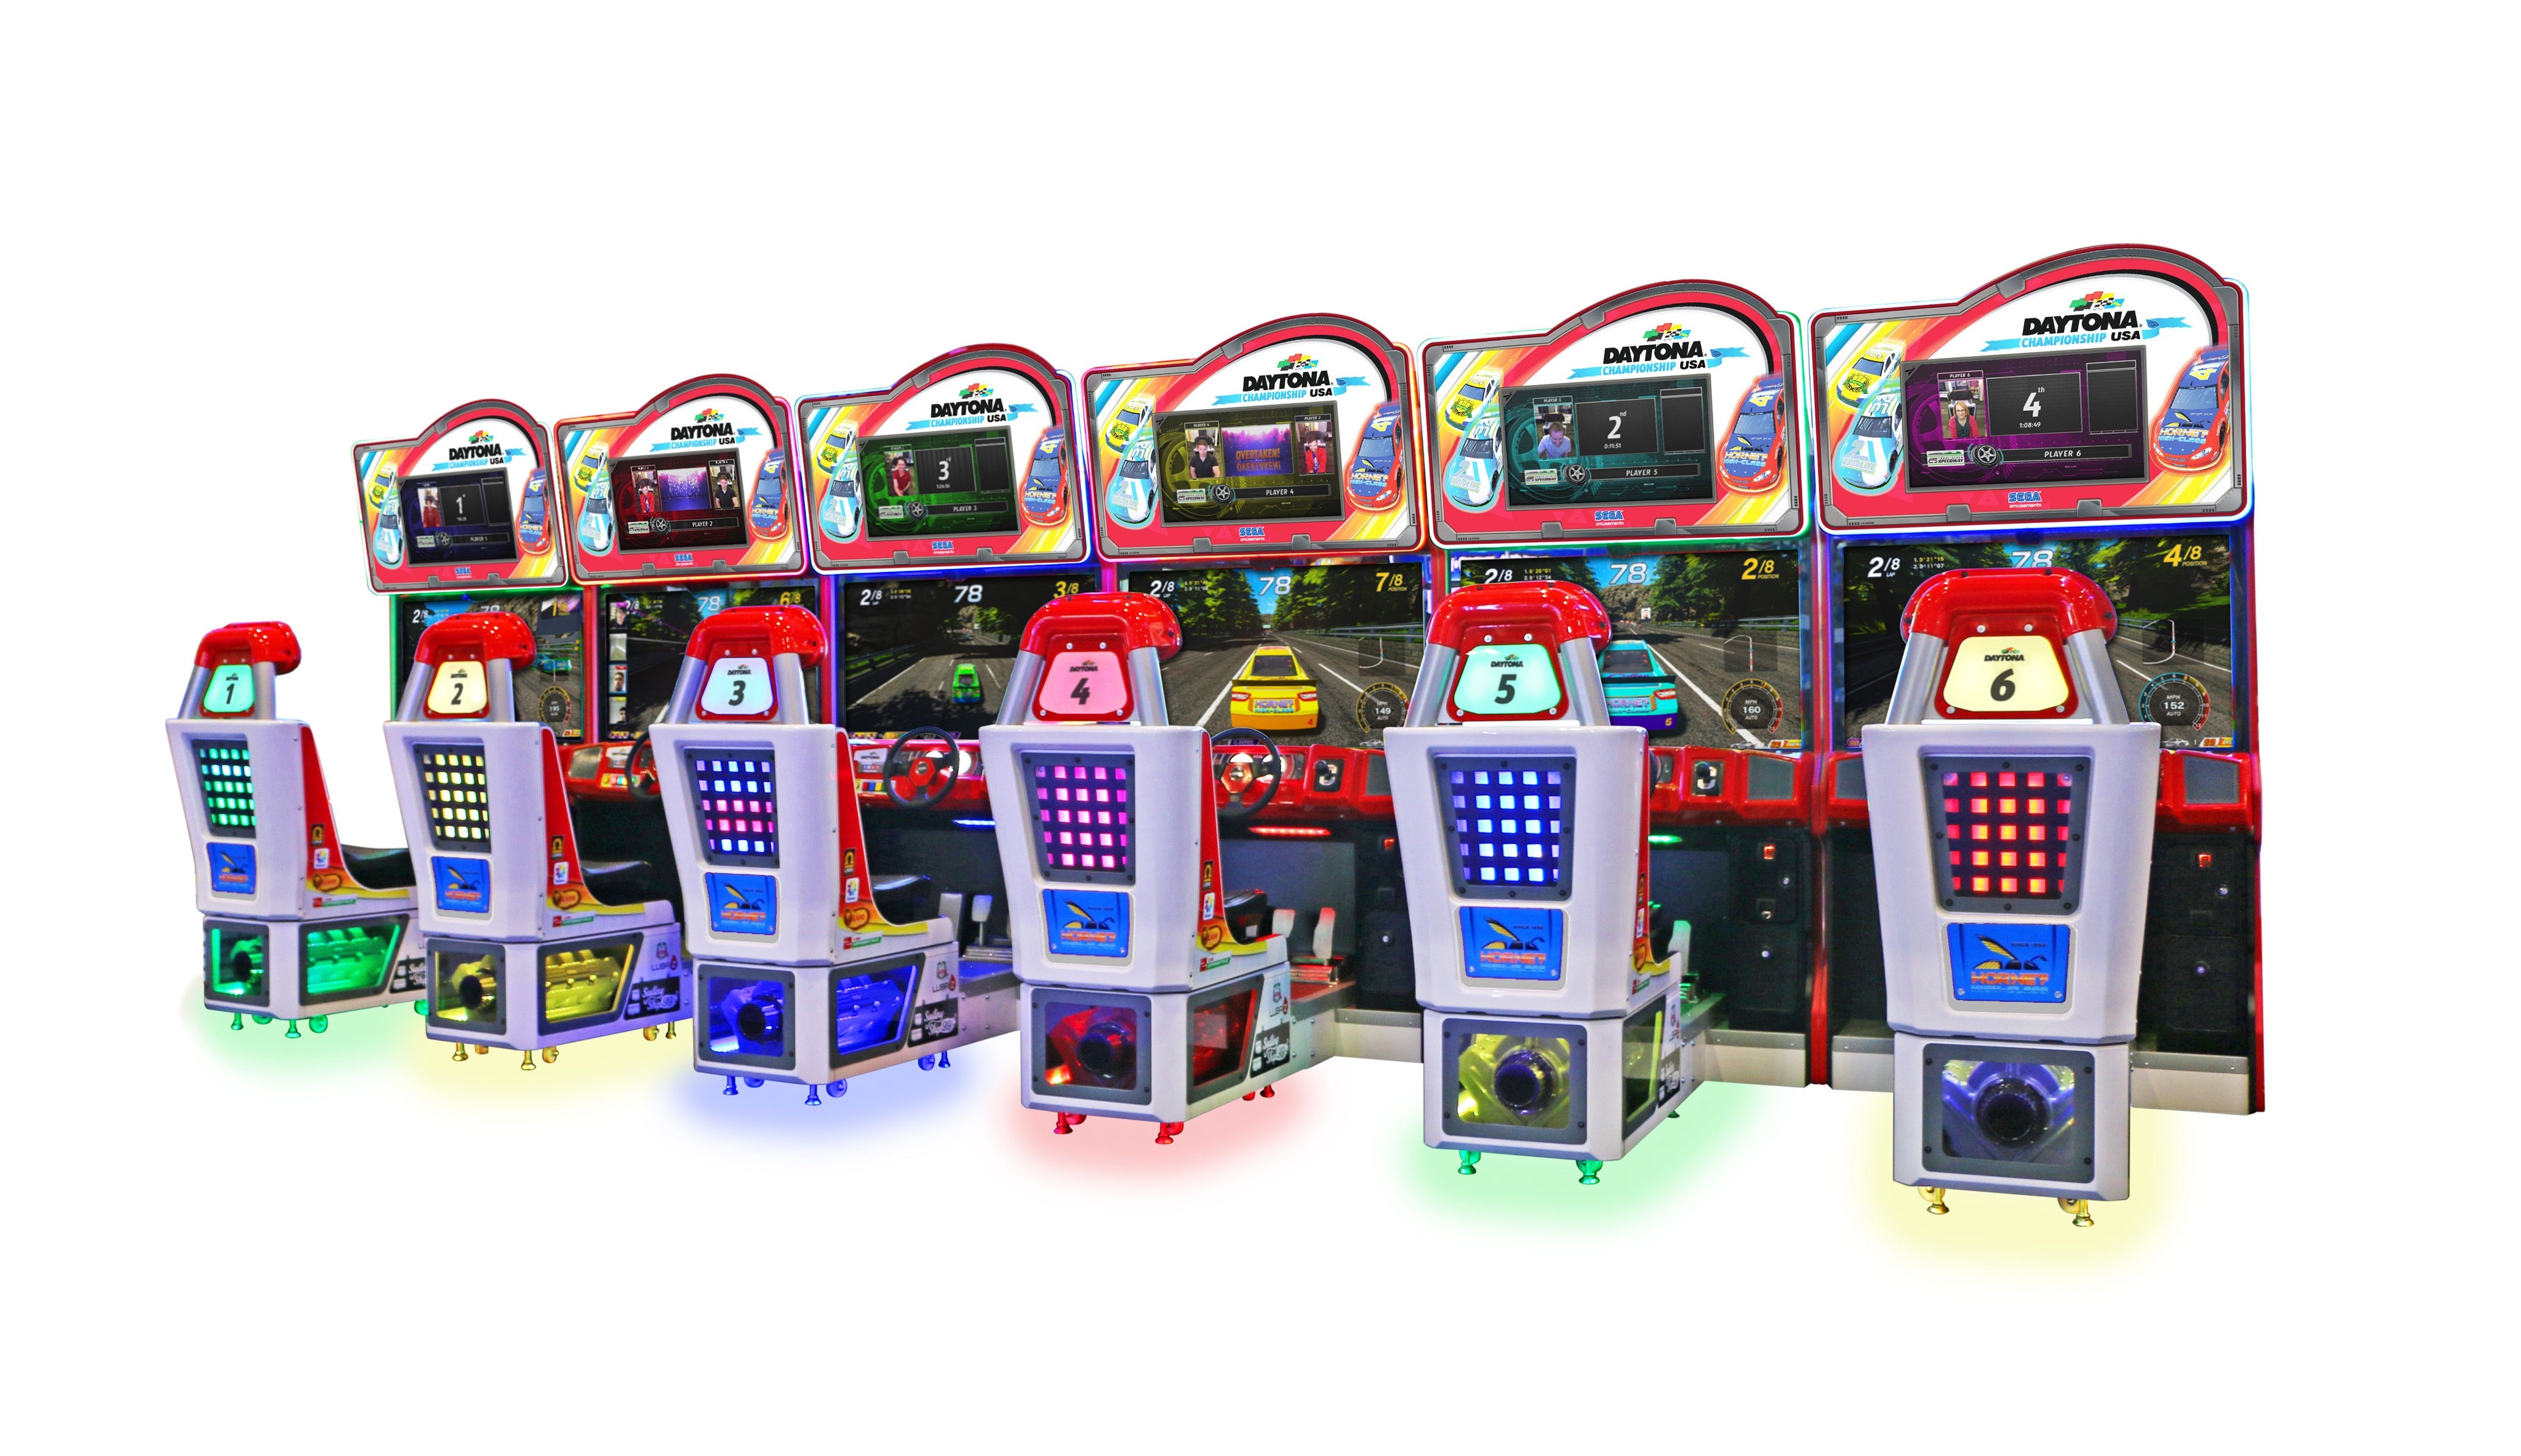 Sega Daytona Championship USA DLX Arcade Game